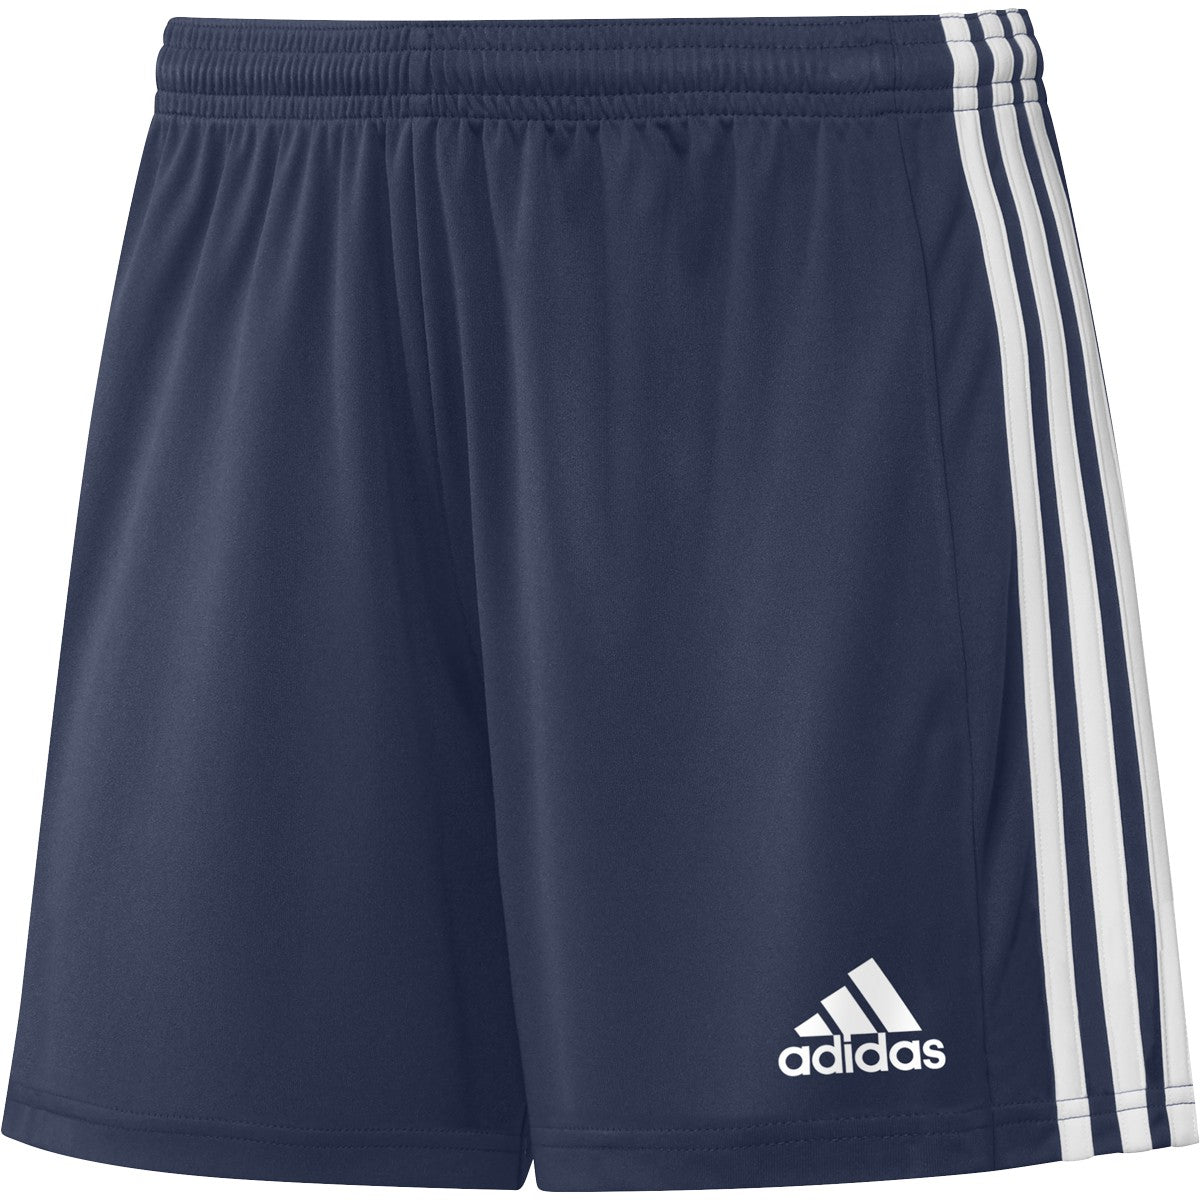 adidas Women's Squadra 21 Short | GN5779 Shorts Adidas Small Team Navy Blue / White 